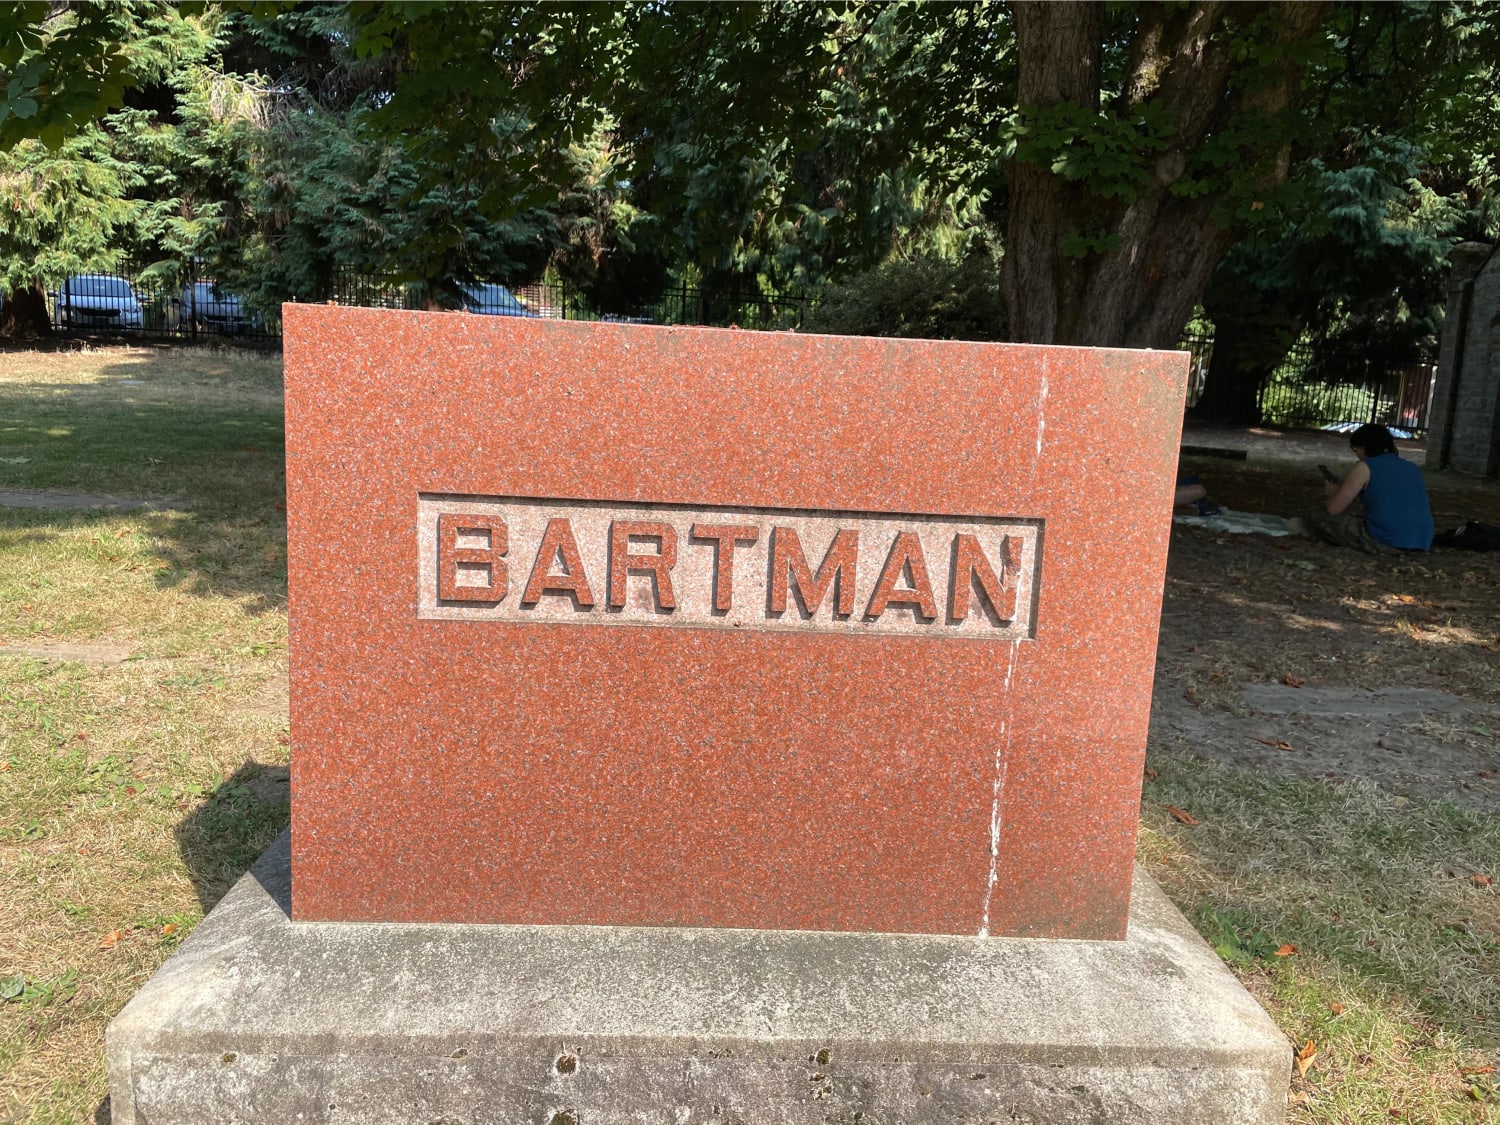 Do the bartman…